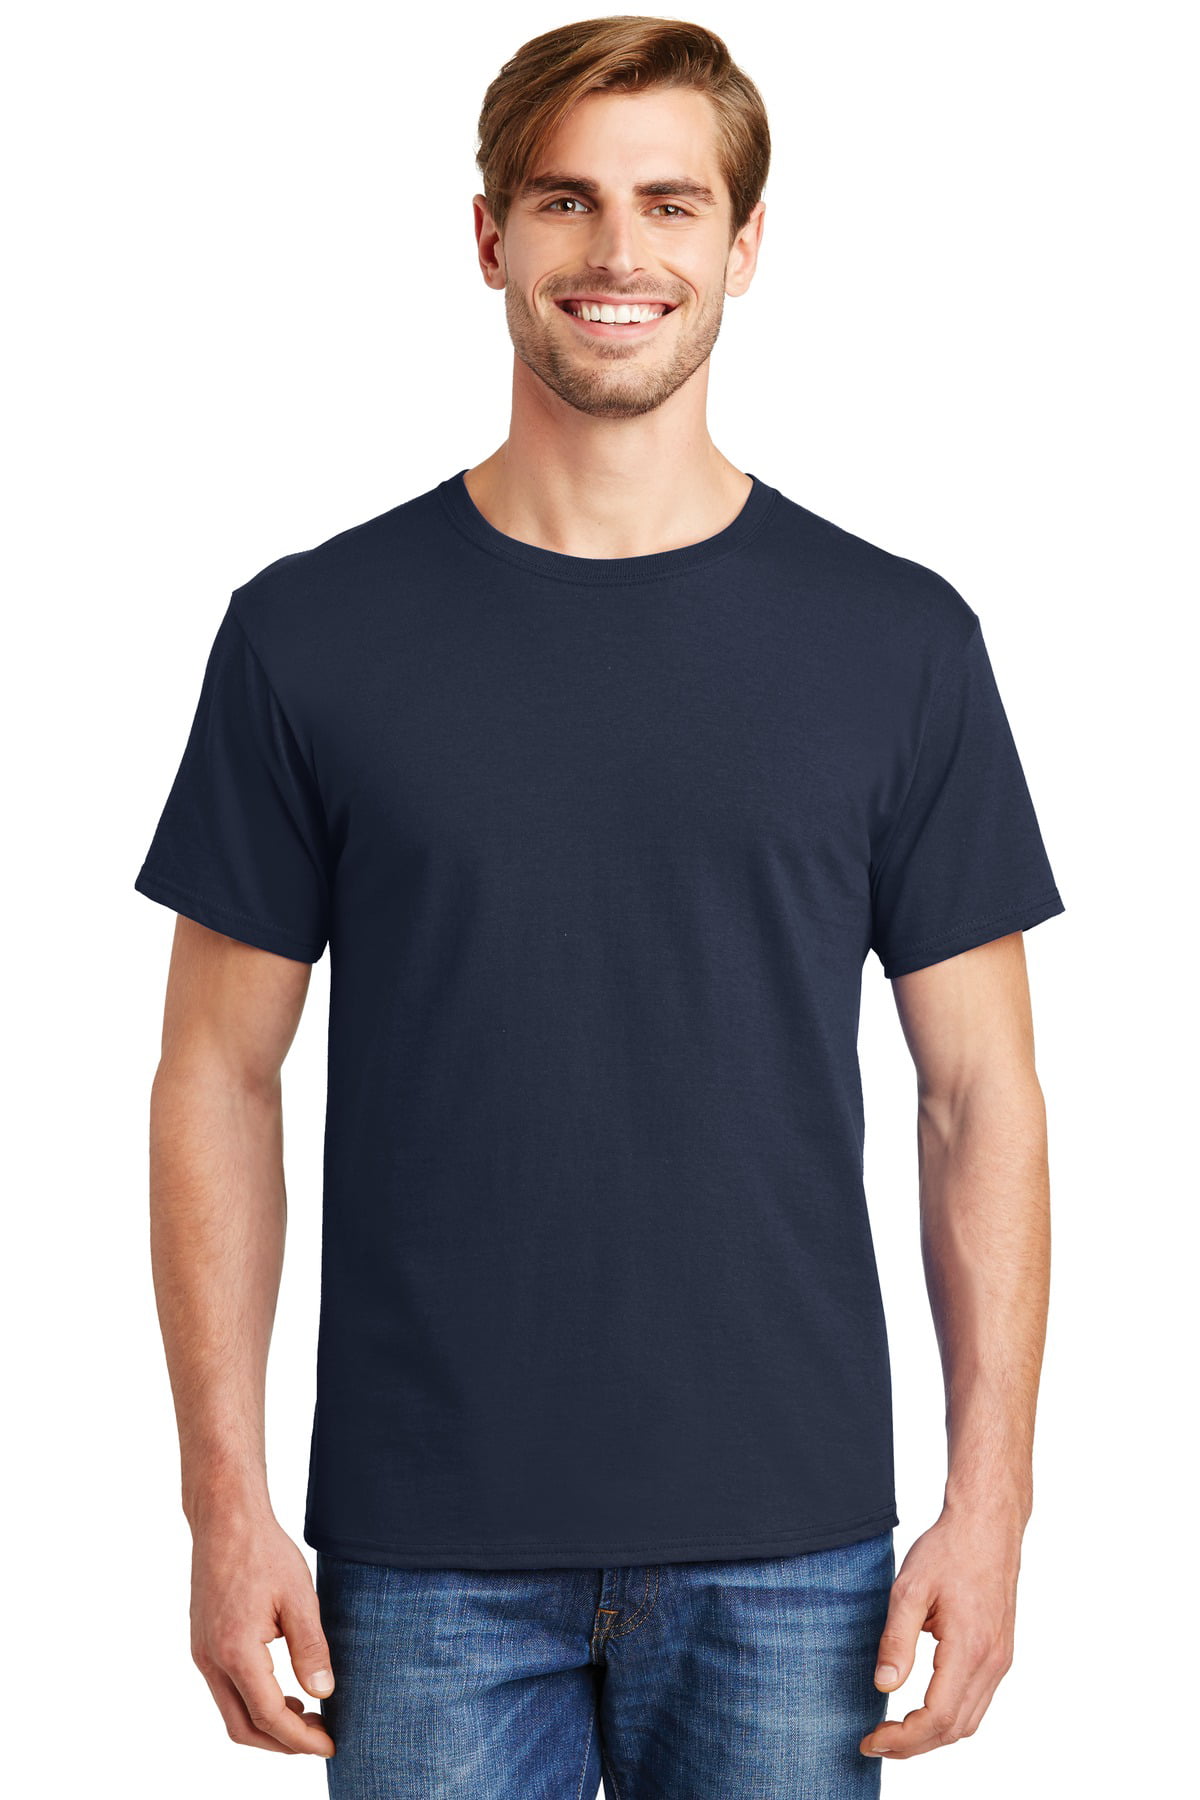 Hanes Men's ComfortSoft 100% Cotton T-Shirt 5280 - Walmart.com